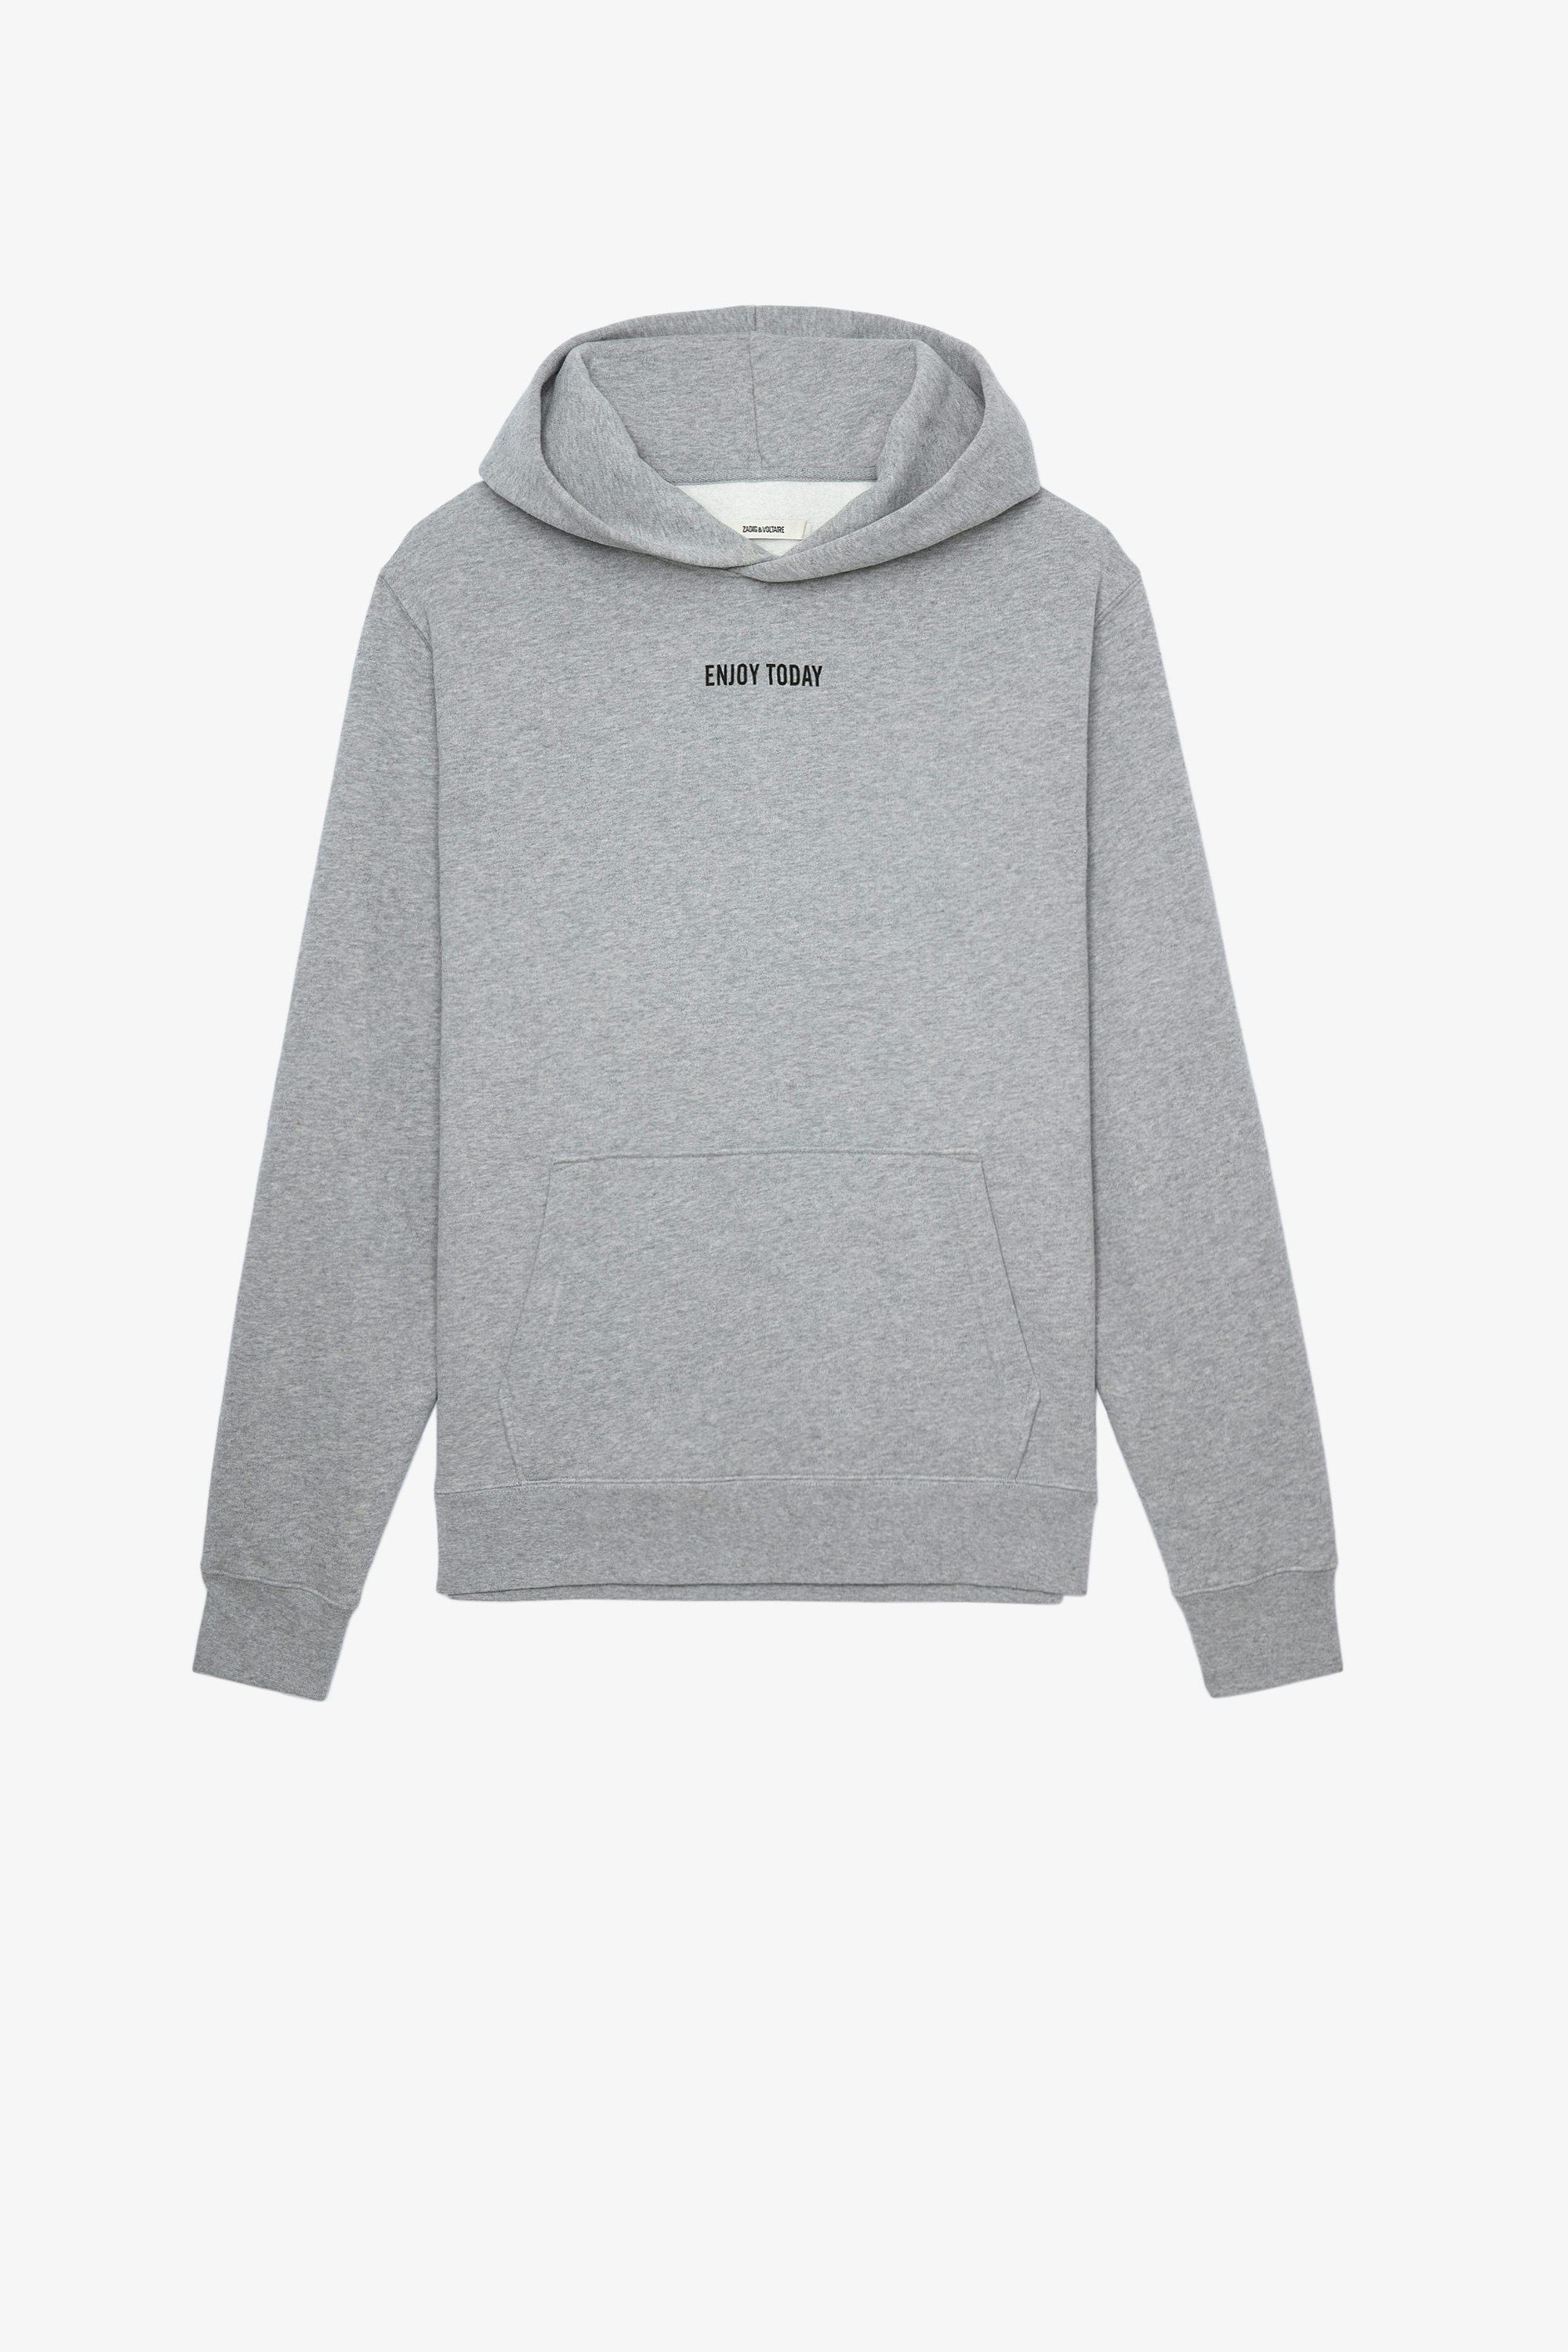 Sanchi Photoprint スウェット Men’s light grey cotton sweatshirt with photoprint on back